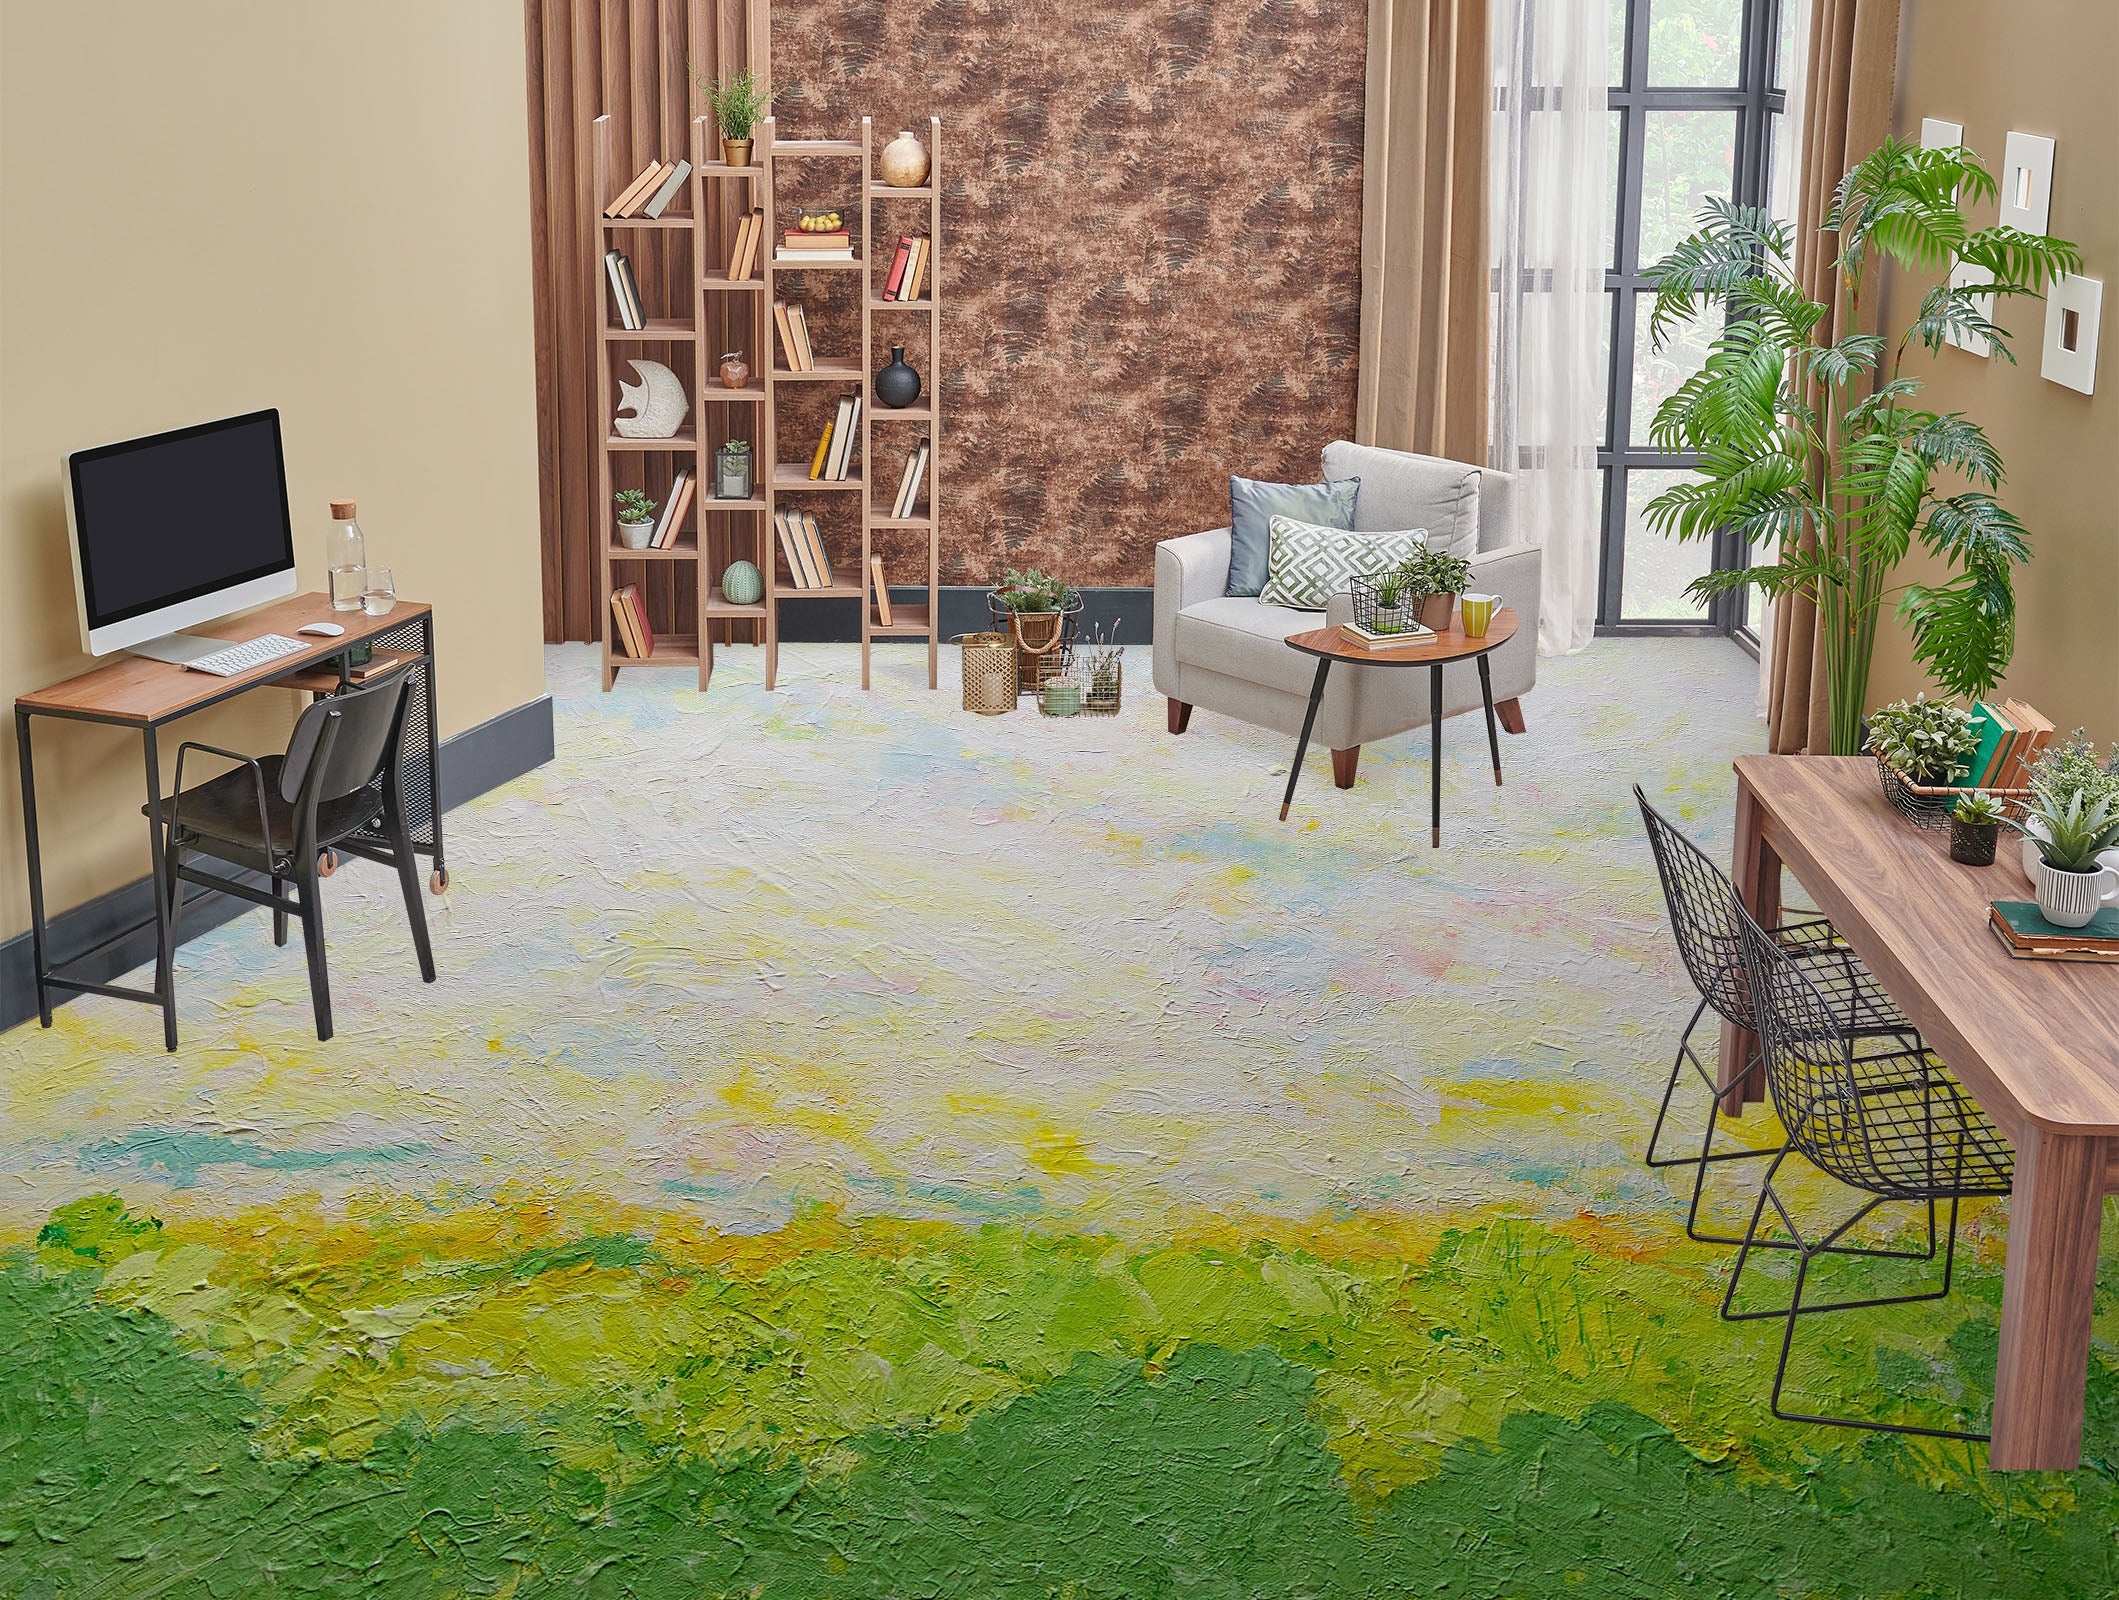 3D Green Grass Pattern Painting 9502 Allan P. Friedlander Floor Mural